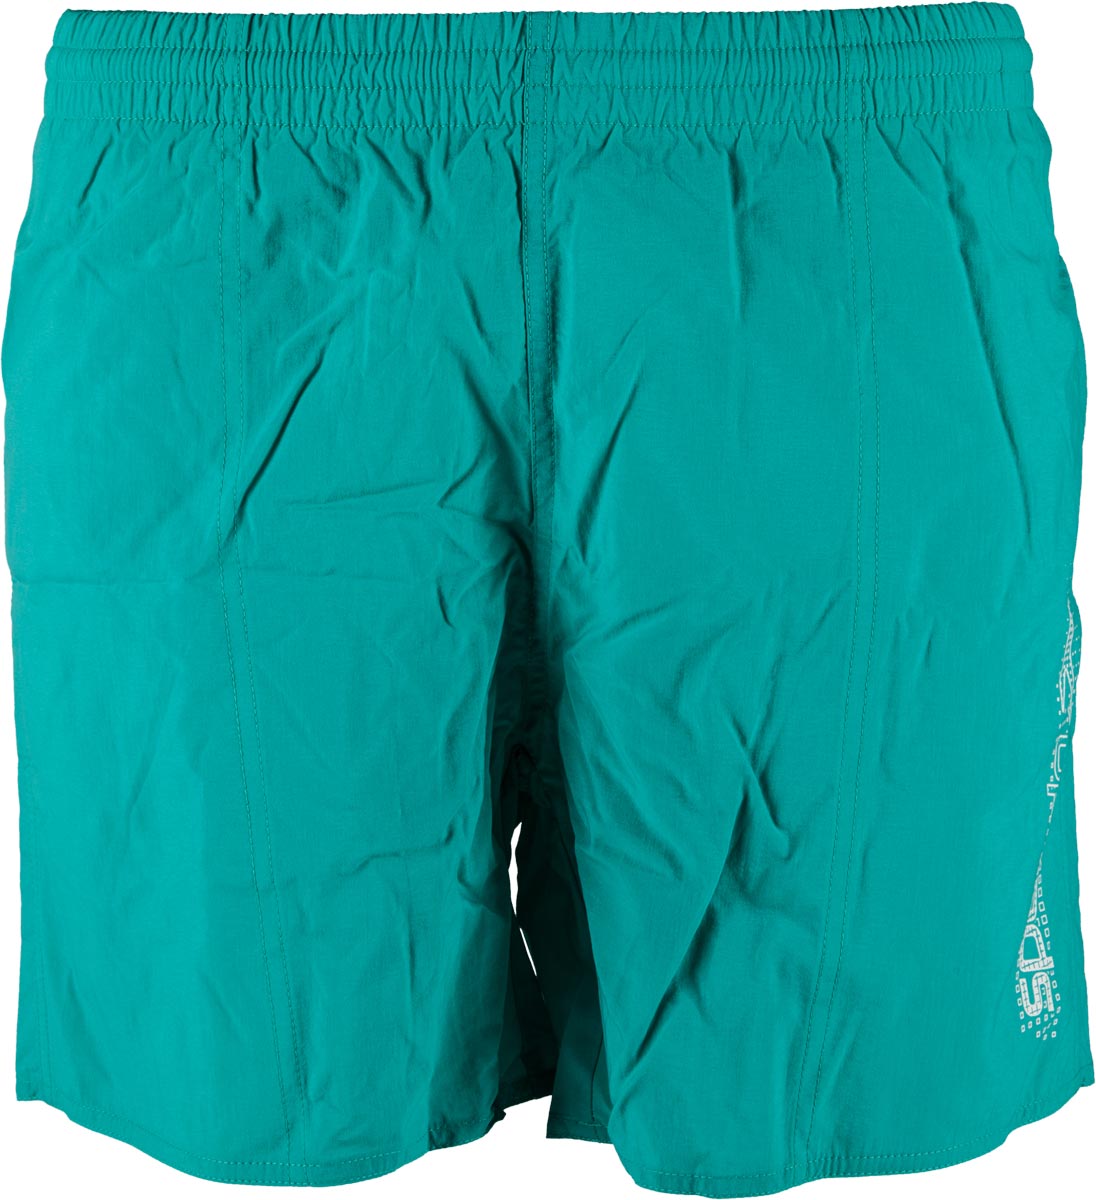 Scope 16 - Swimming shorts